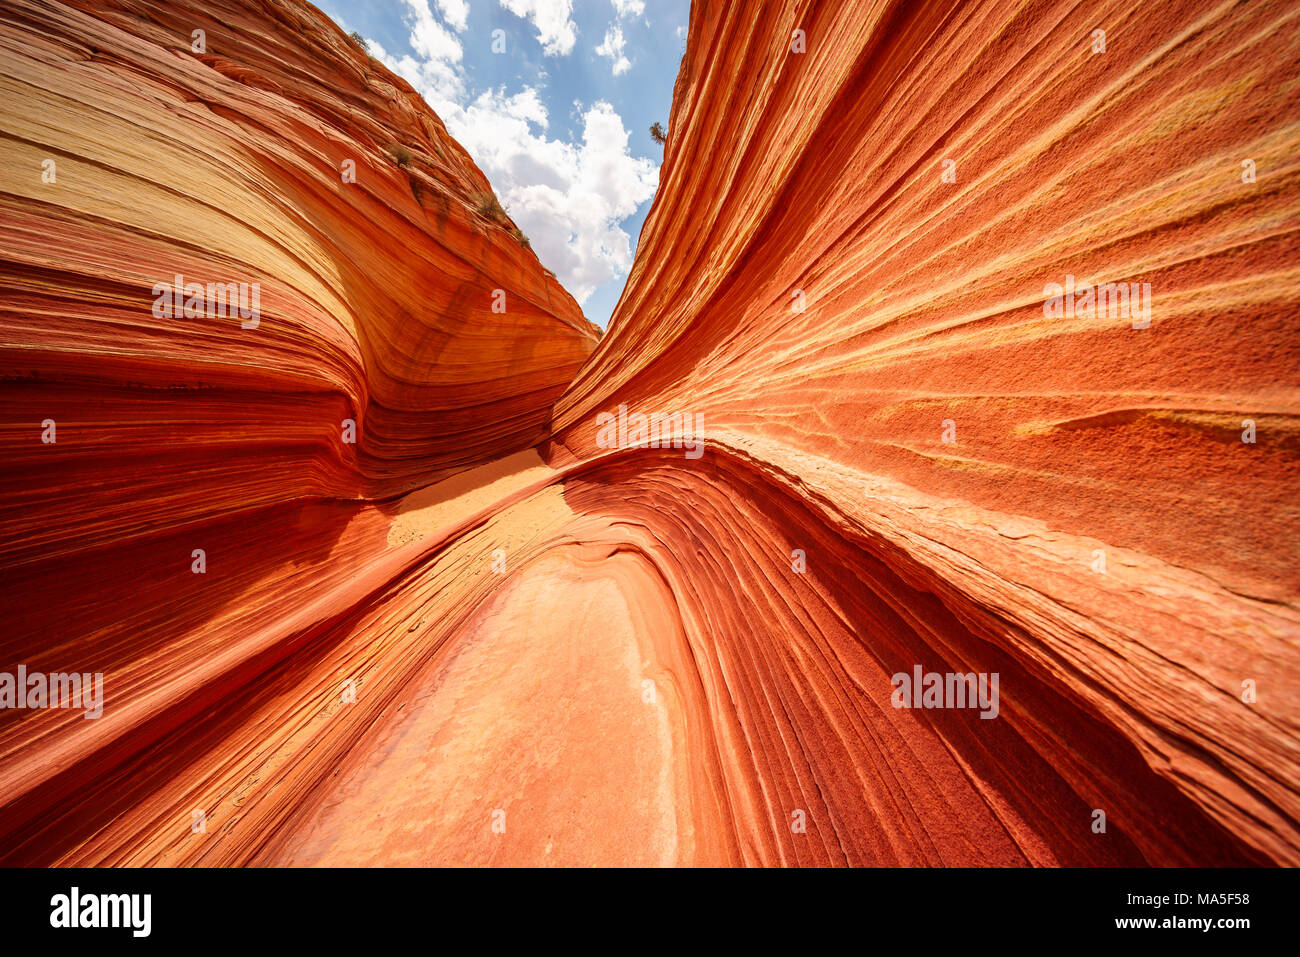 Die Wave, Coyote Buttes North, Paria Canyon-Vermillion Cliffs Wilderness, Colorado Plateau, Arizona, USA Stockfoto